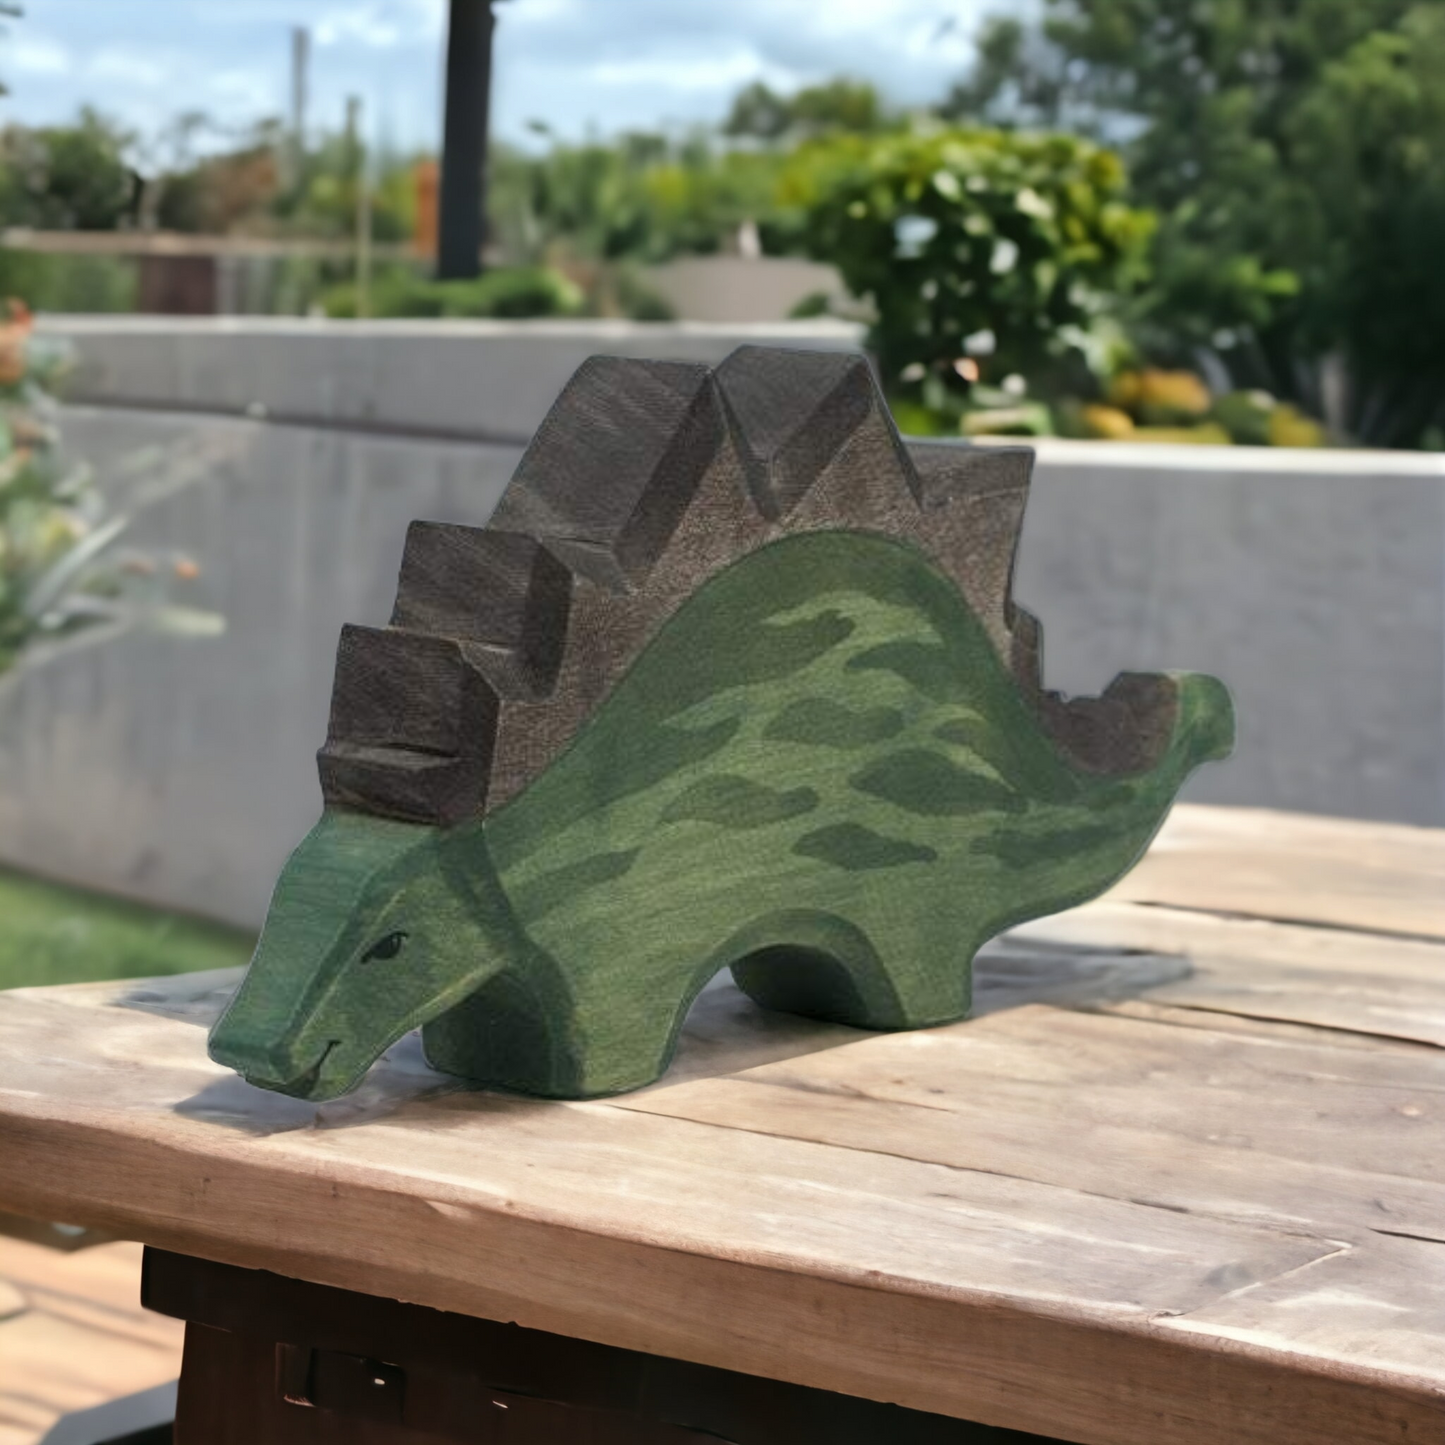 Wooden Stegosaurus